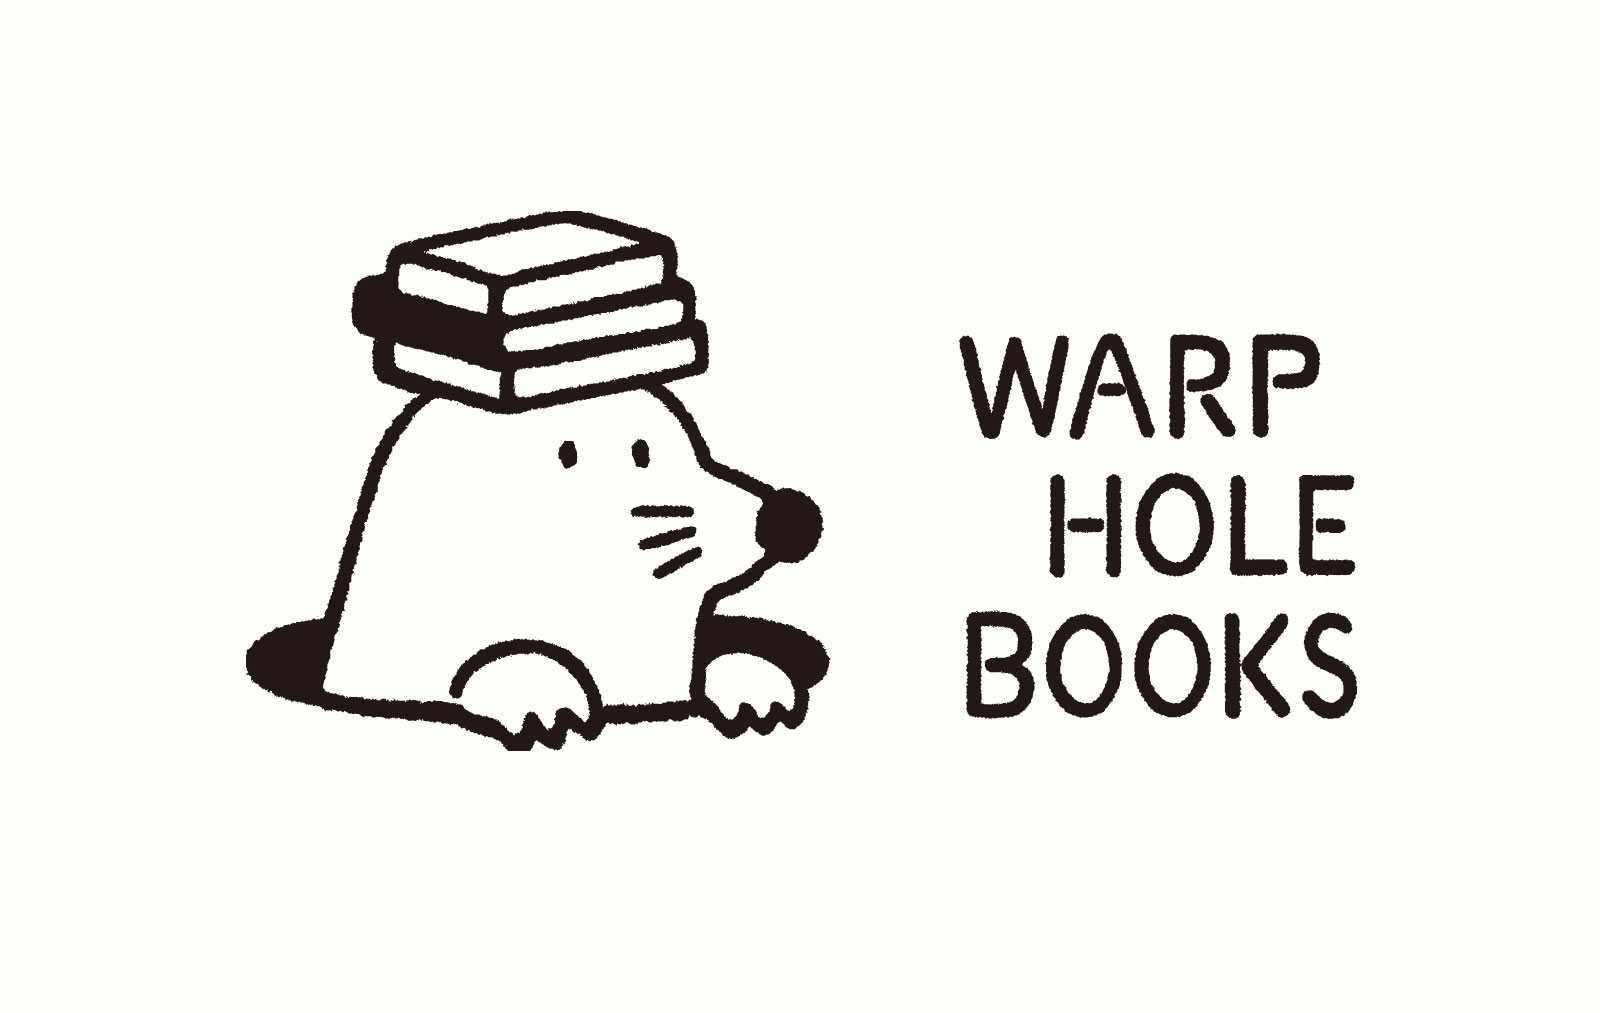 WARP HOLE BOOKS